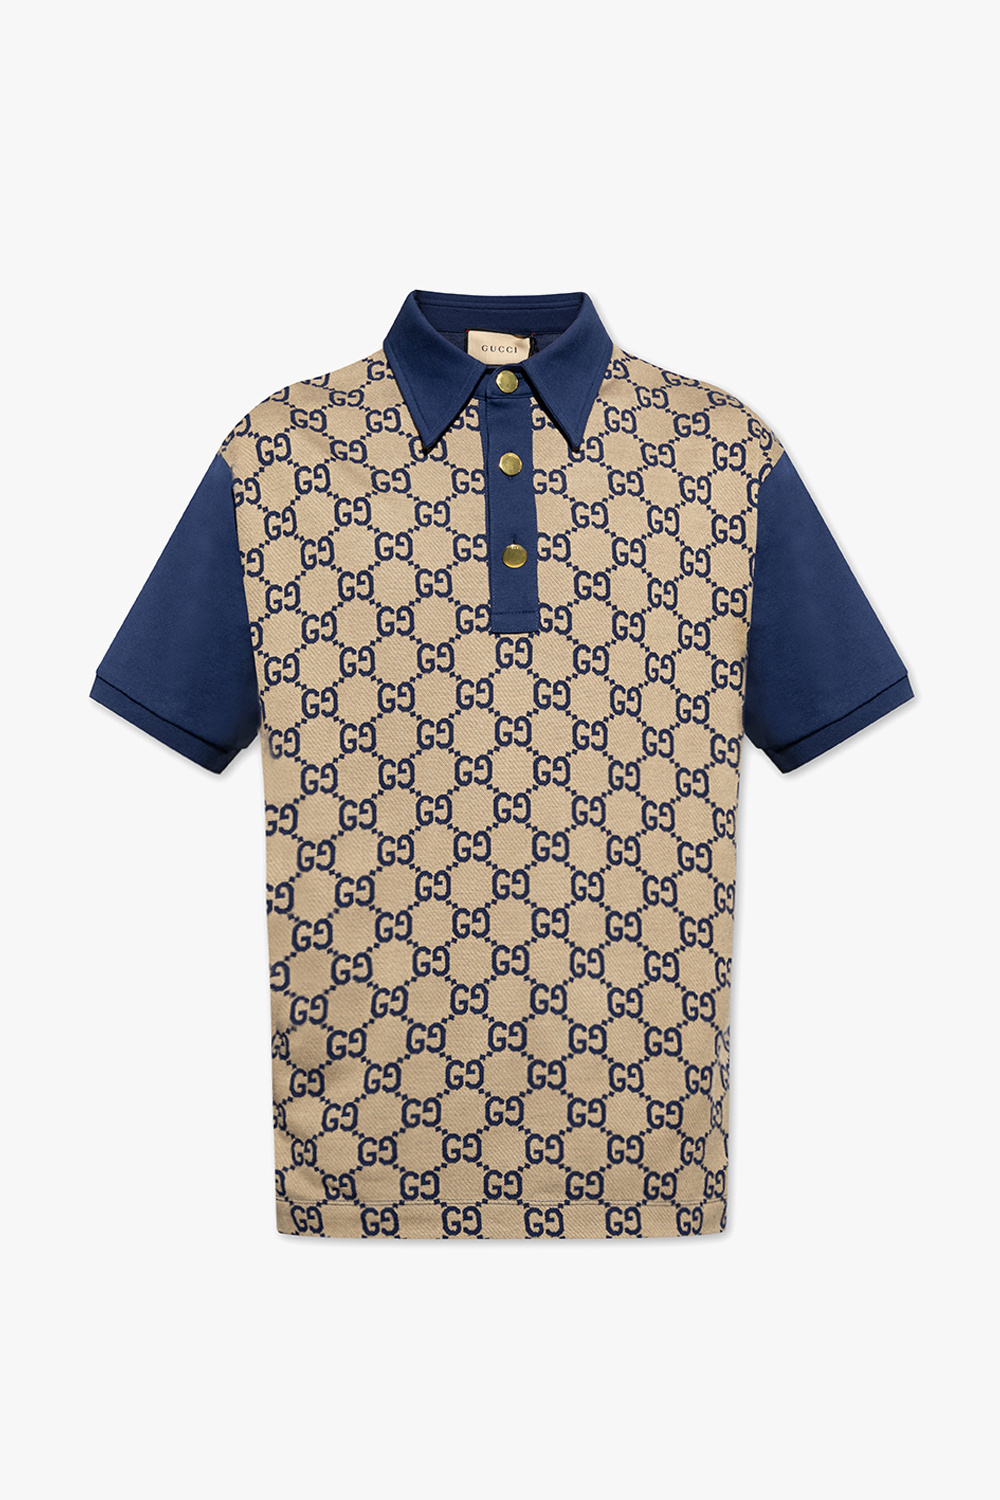 Gucci Monogrammed shirt, Men's Clothing